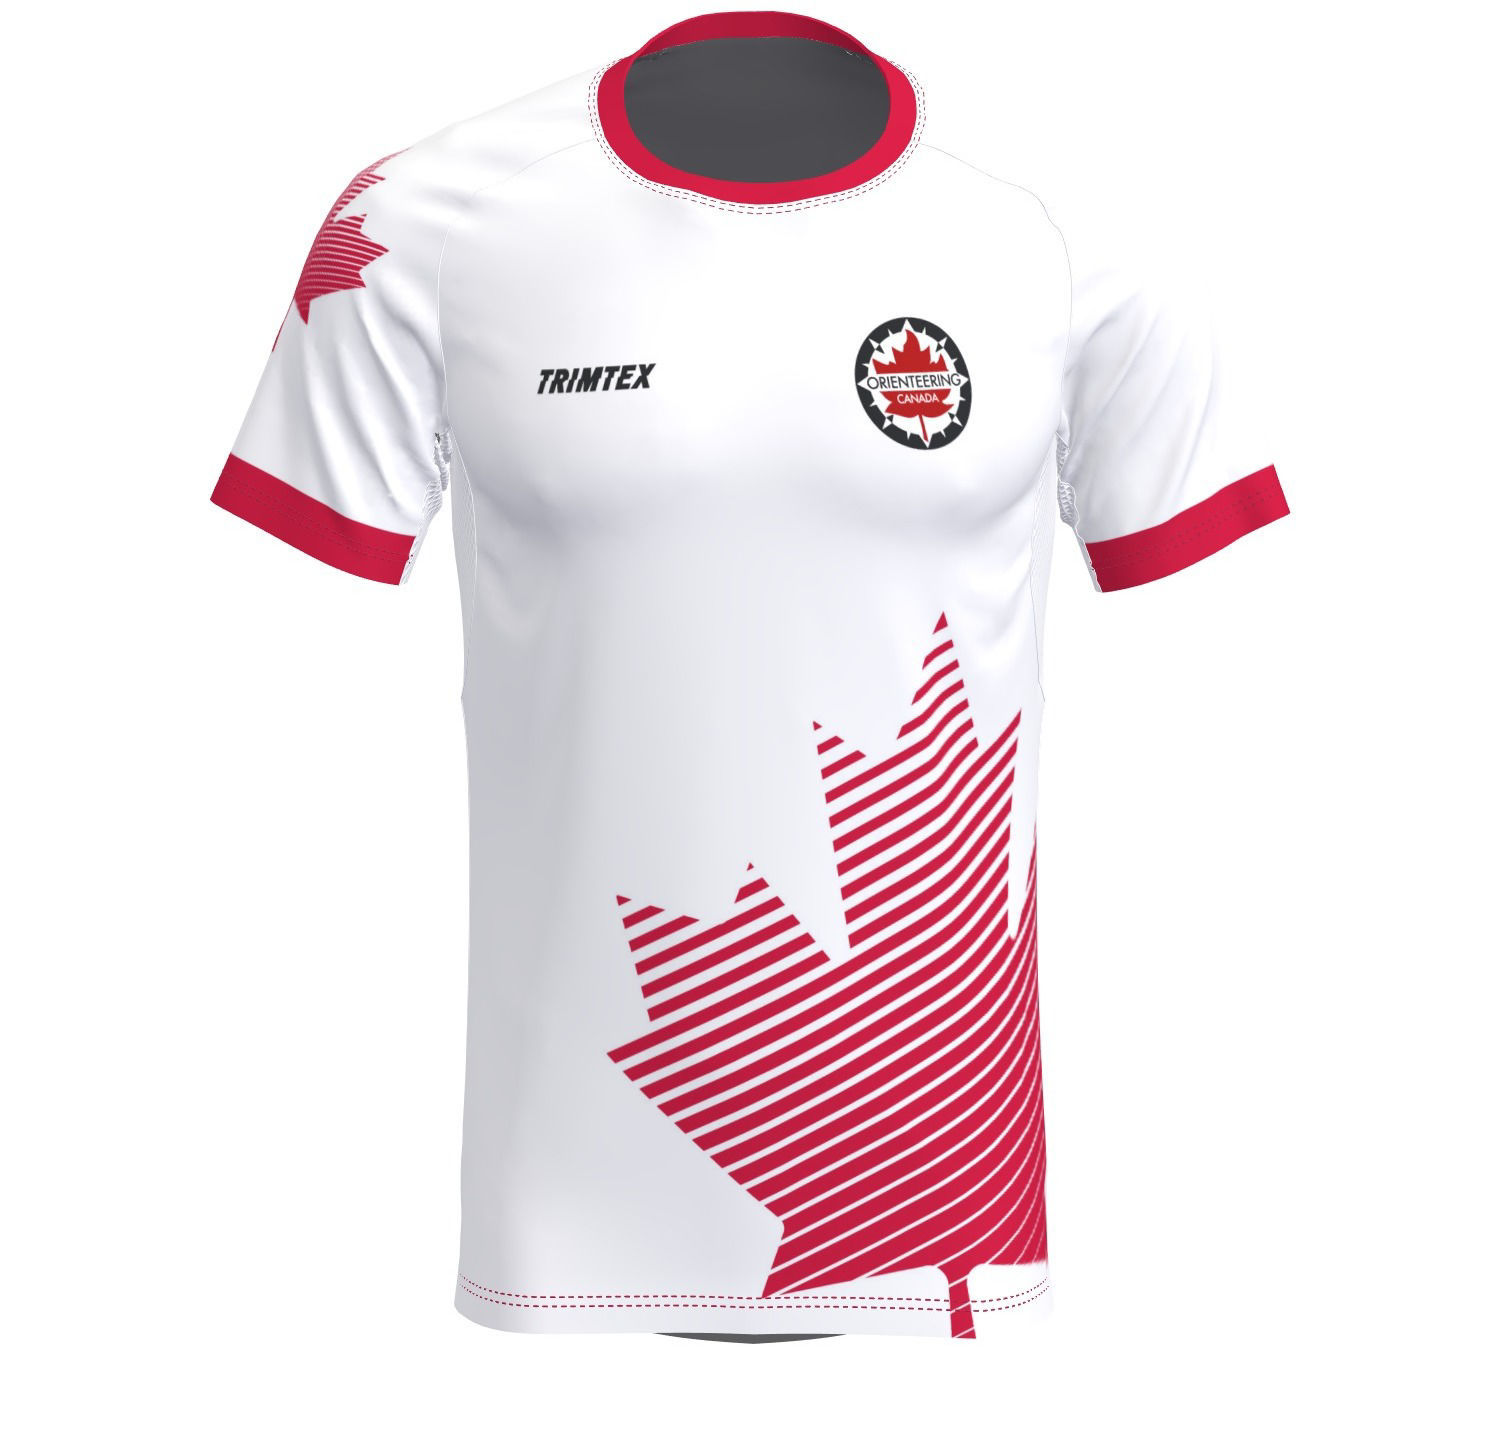  Team Canada Supporter's Shirt - 2021 design